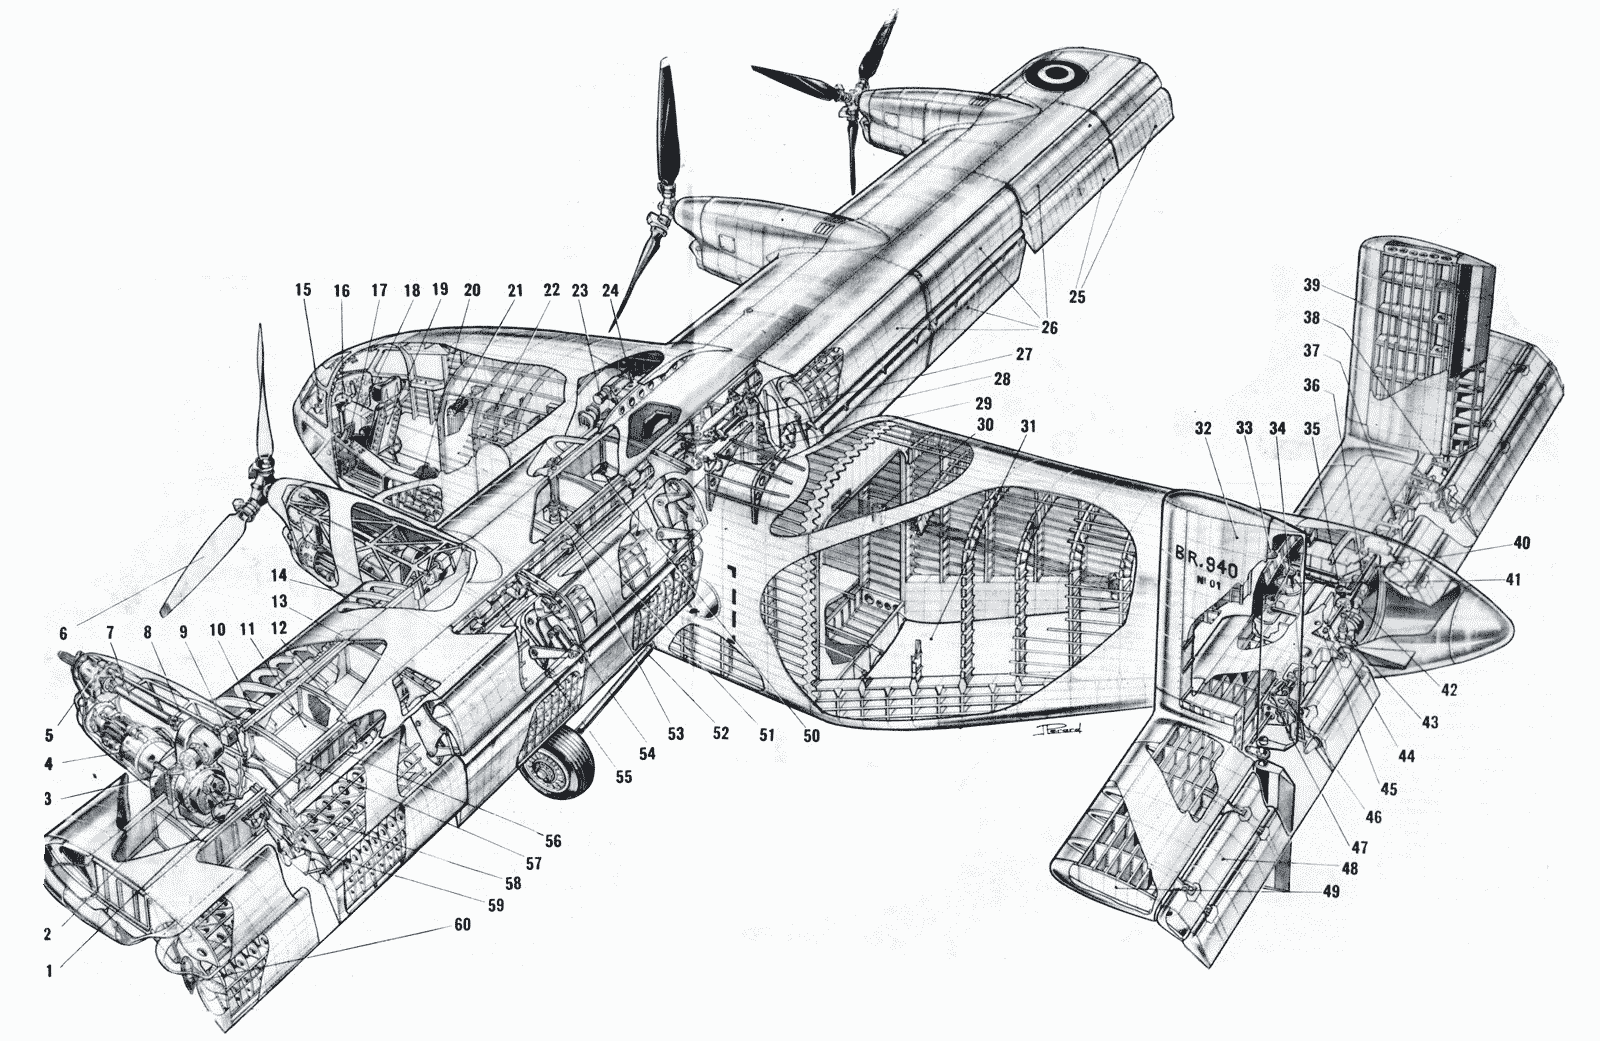 Breguet Br-490 “Intégral” Cutaway Drawing in High quality